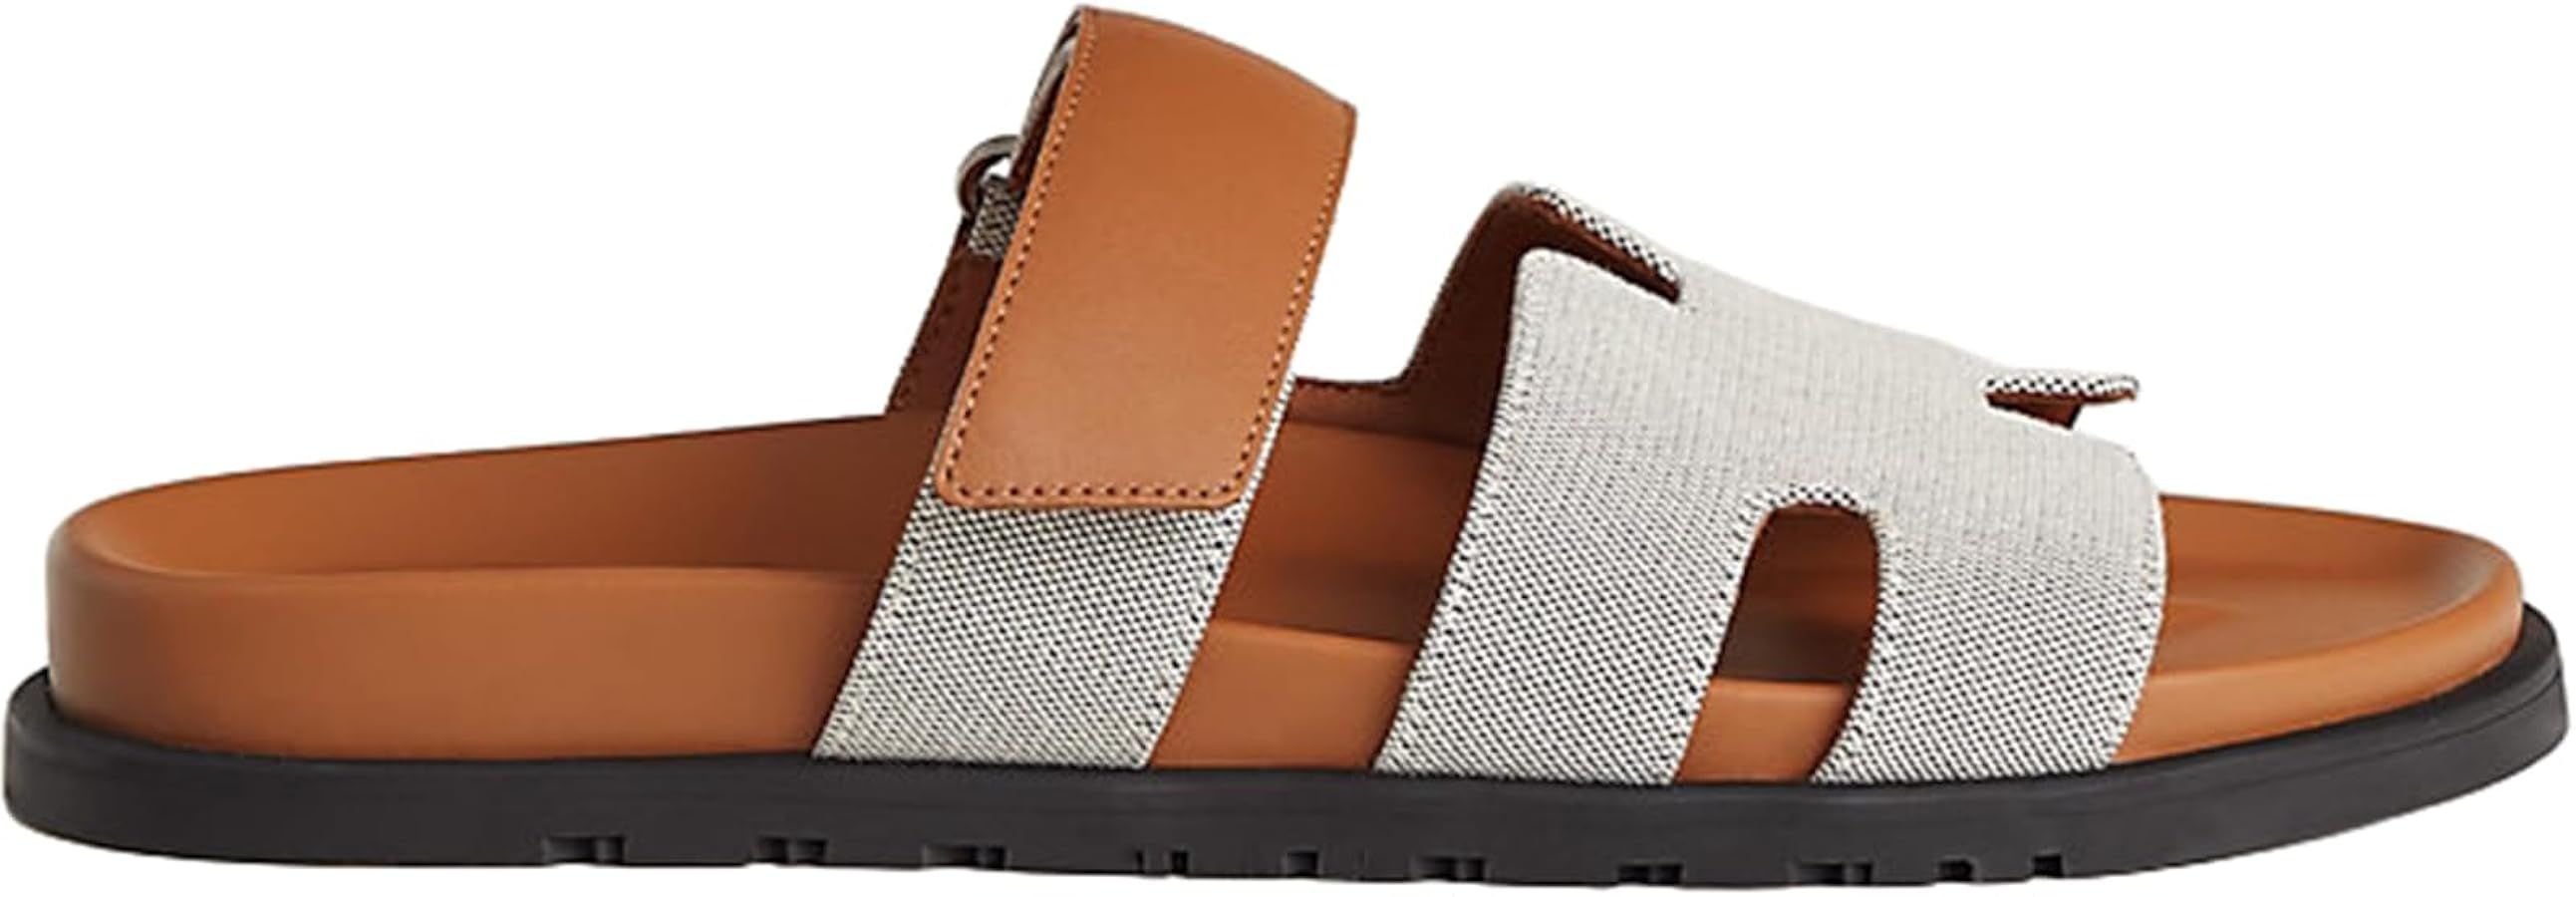 Women's Fashion Slide Sandals Summer Adjustable Strap Open Toe Leather Sandals | Amazon (US)